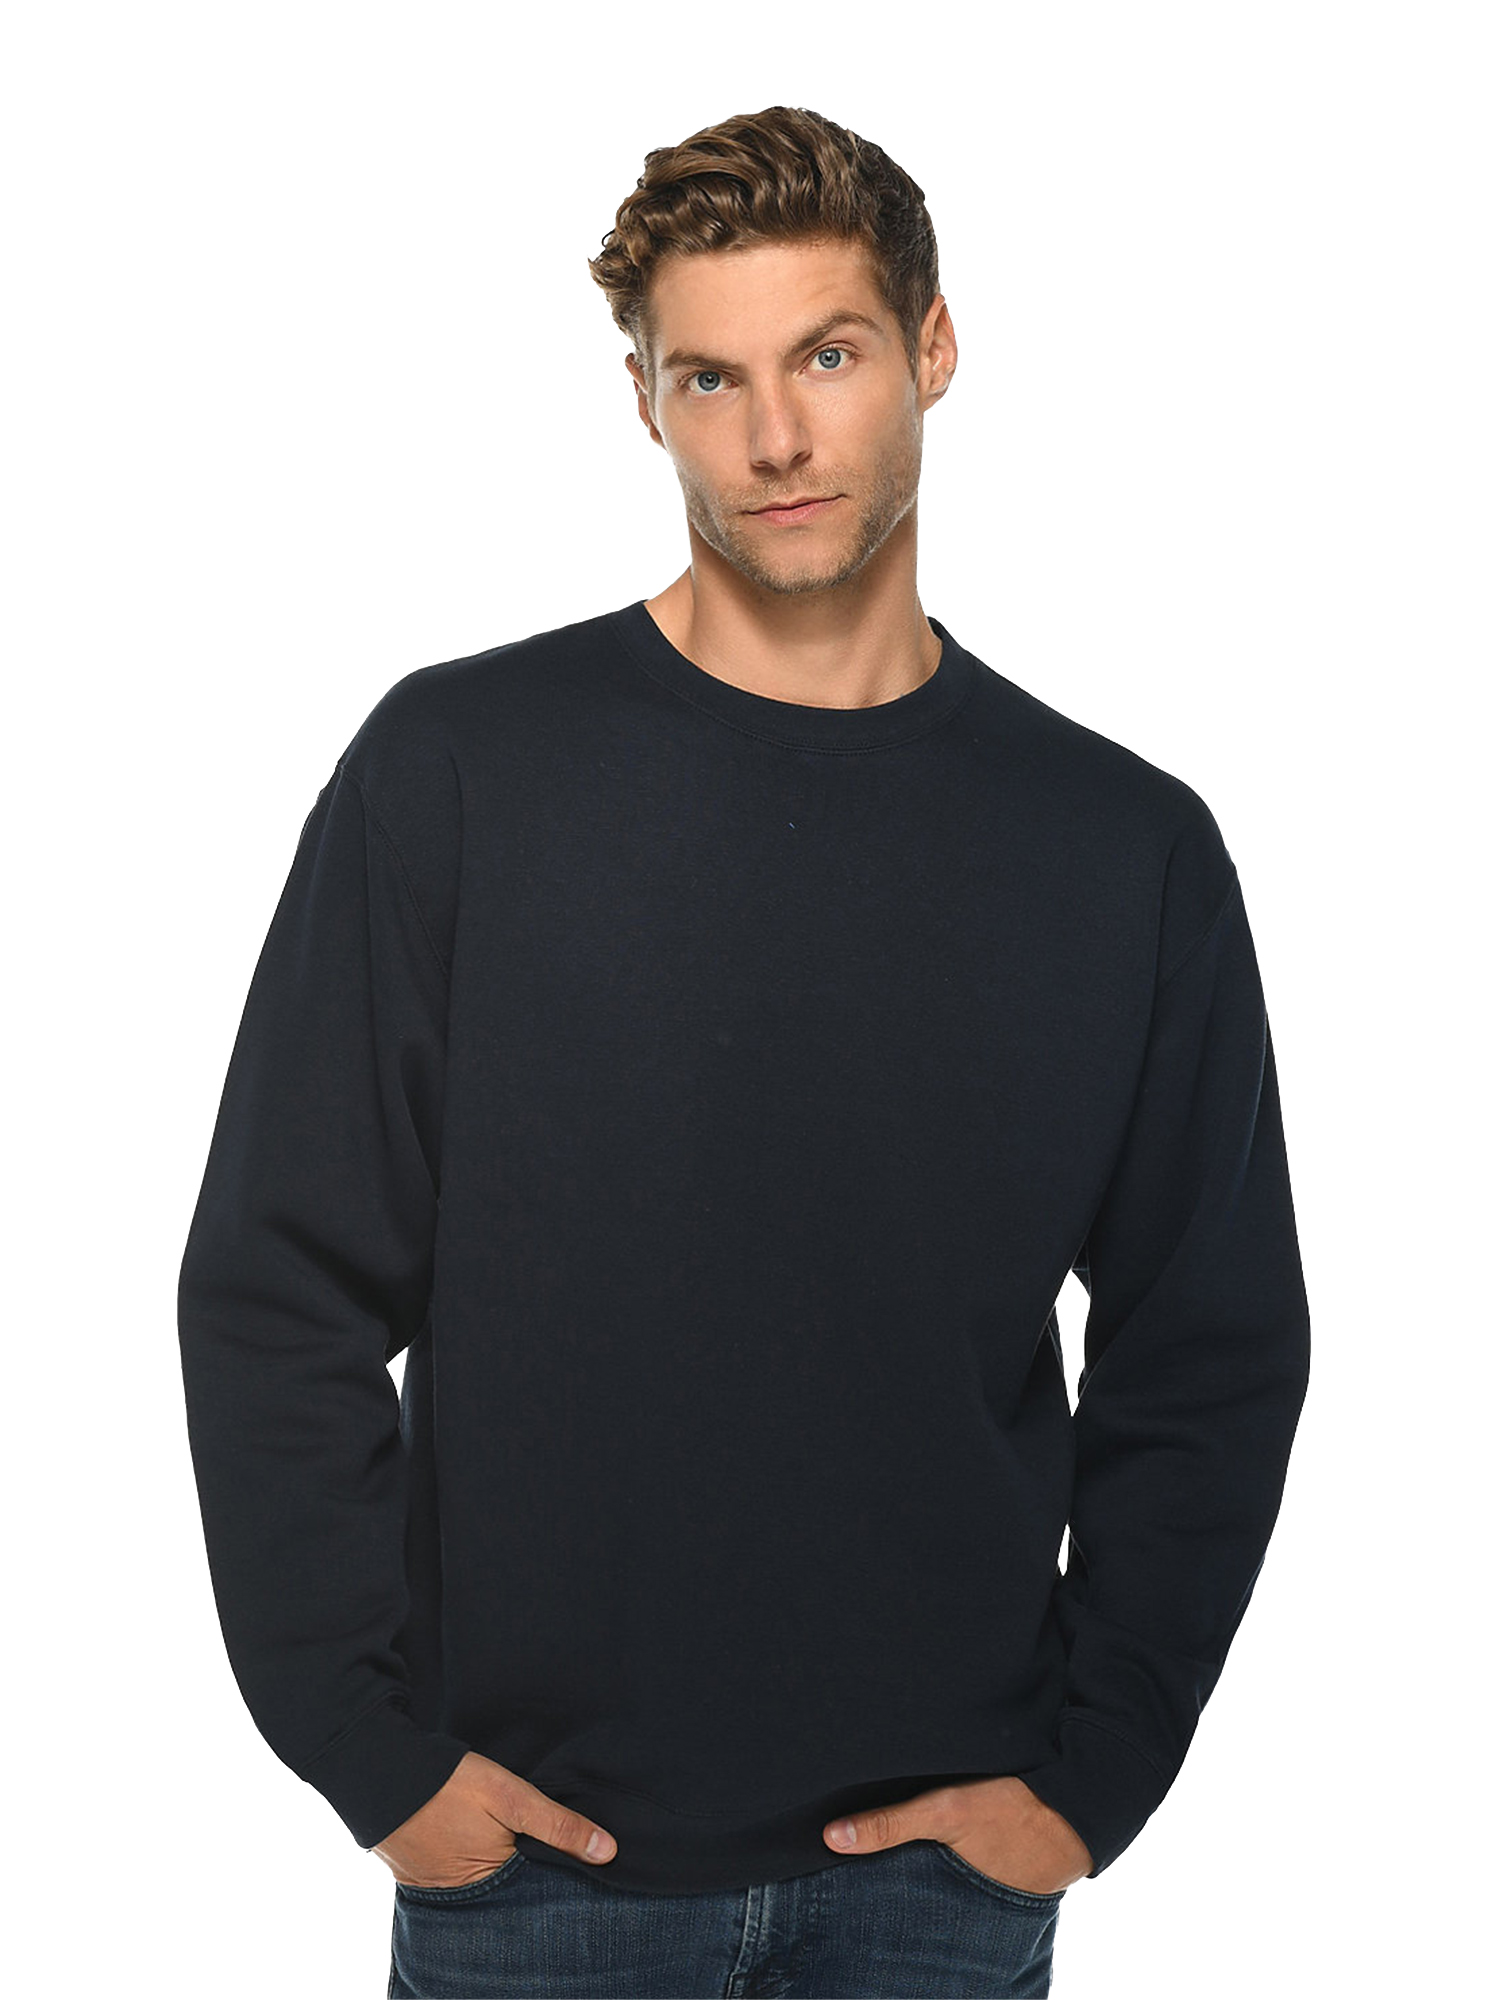 Navy Sweatshirts for Men Womens Sweatshirt Casual Plain Long Sleeve Navy Blue Sweaters for Women and Men - image 1 of 5